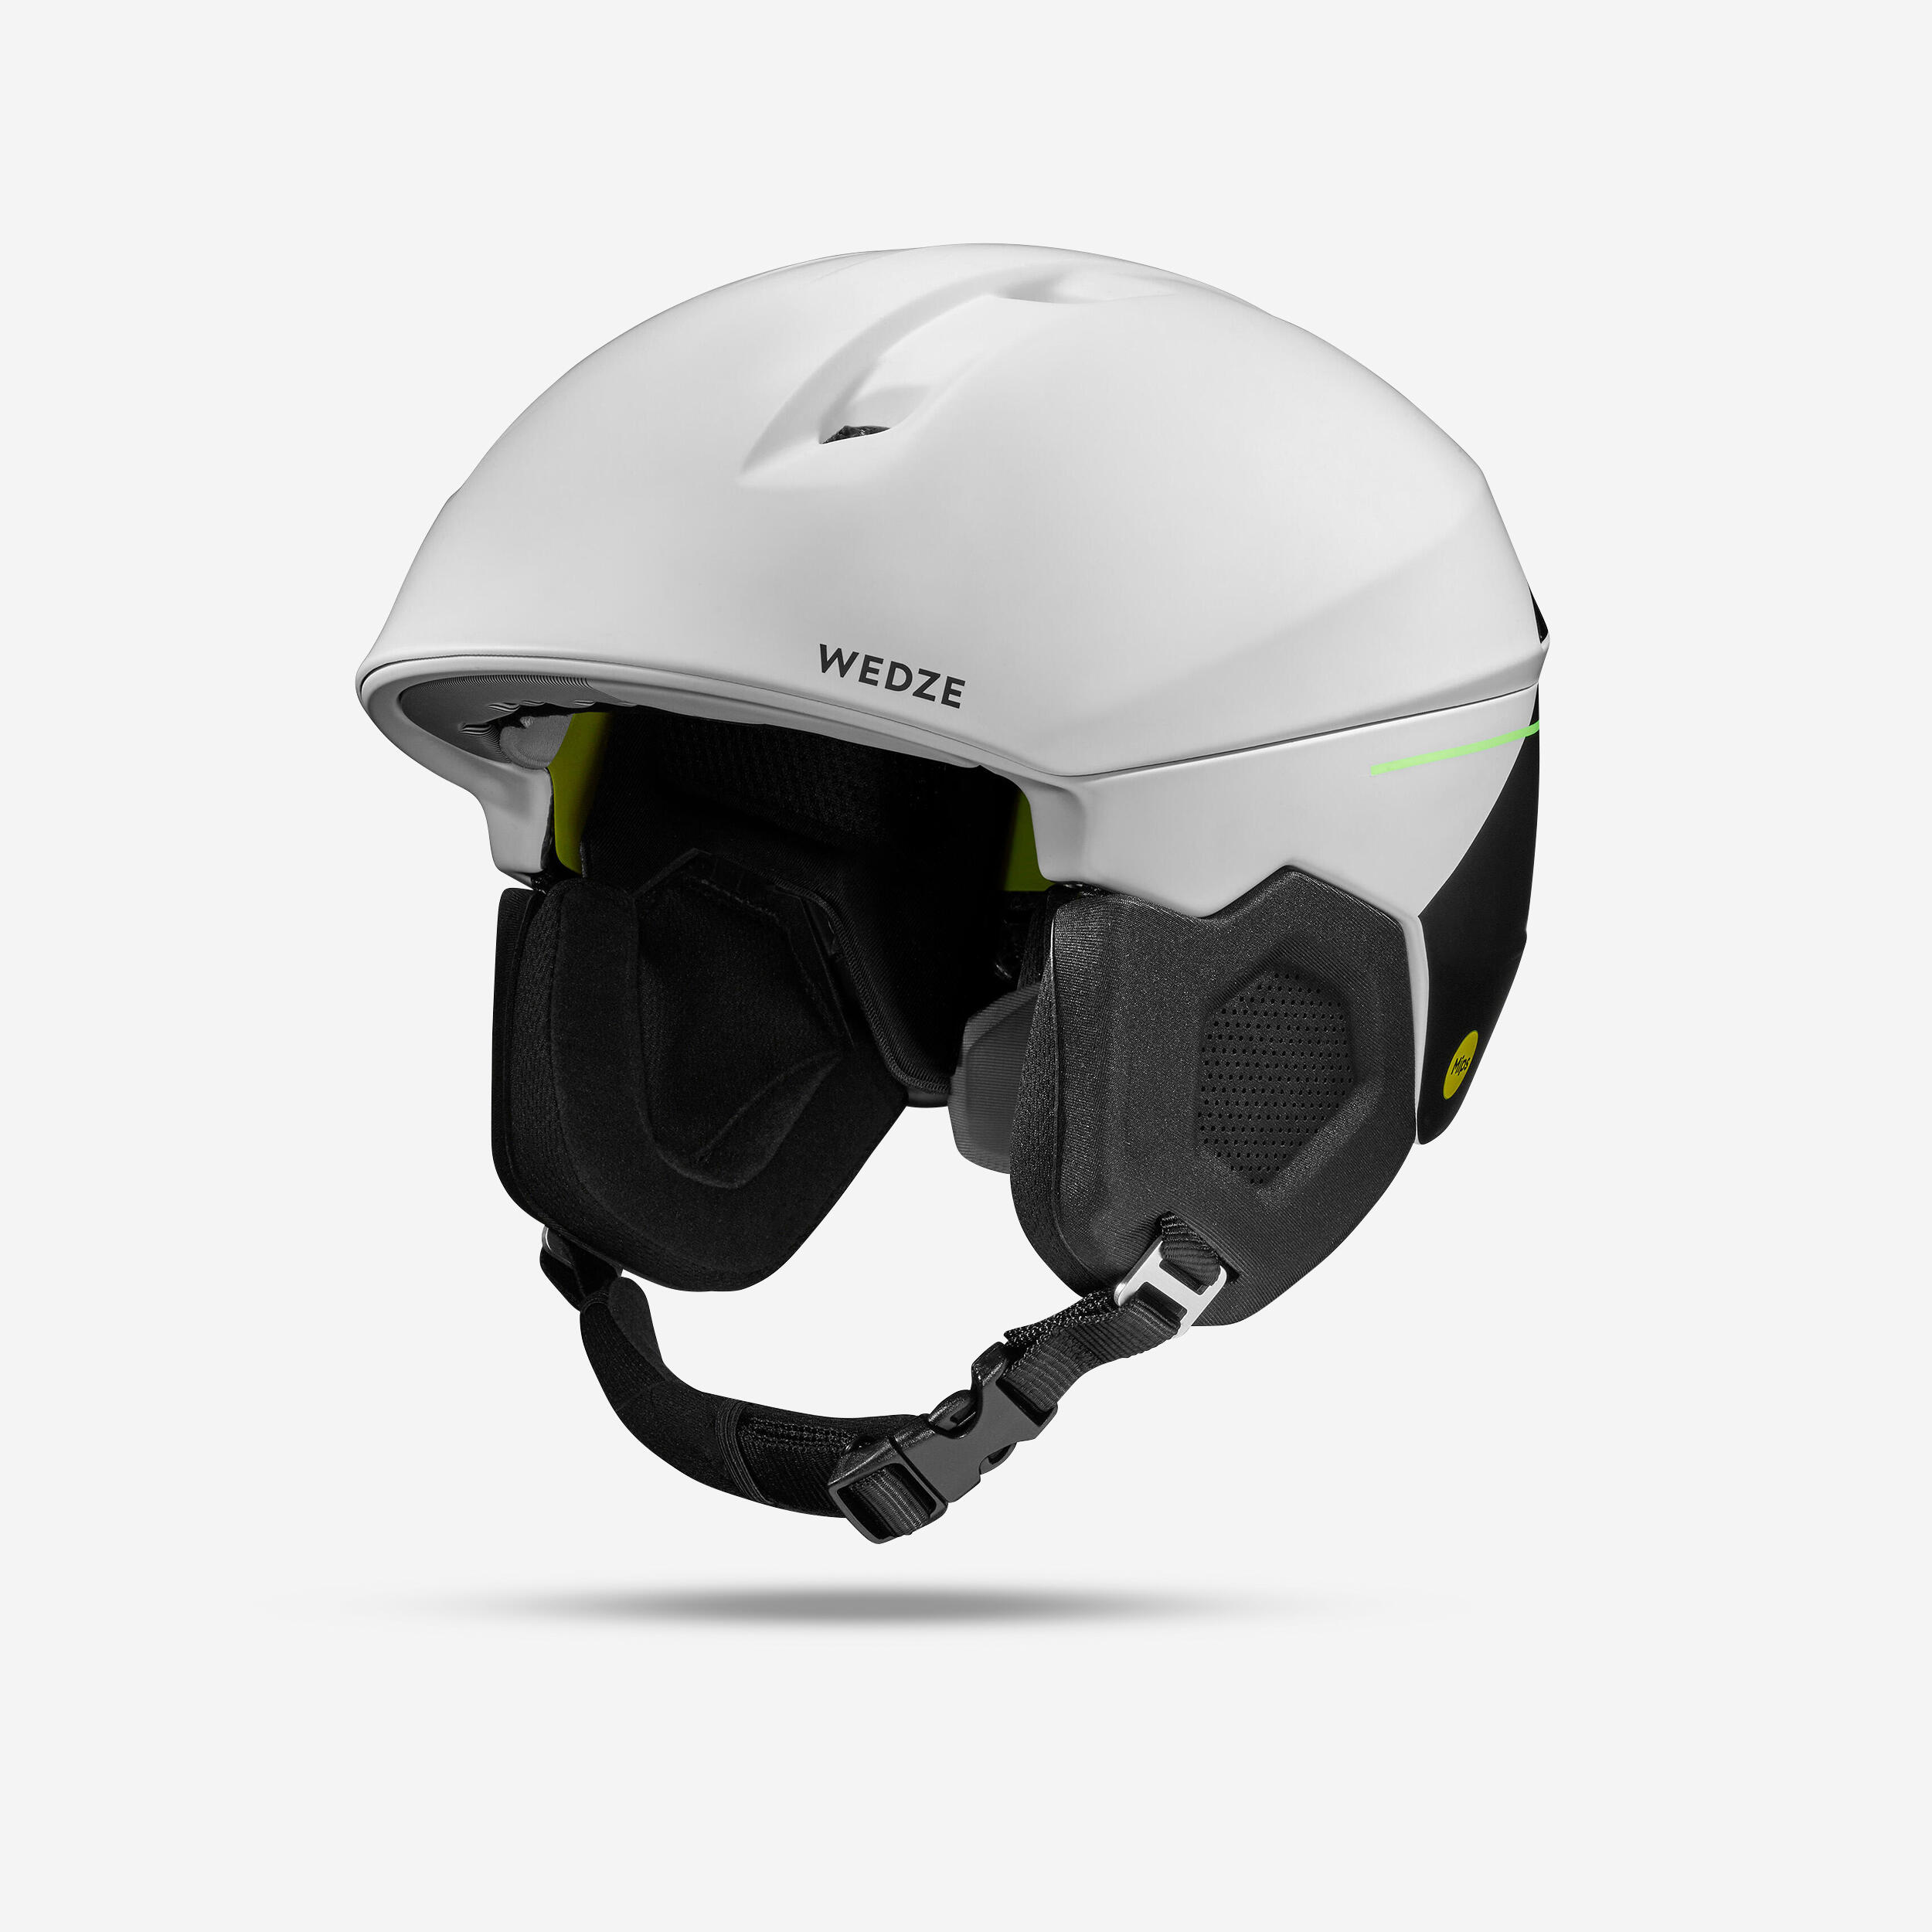 WEDZE Adult ski helmet - PST 900 MIPS - white and black